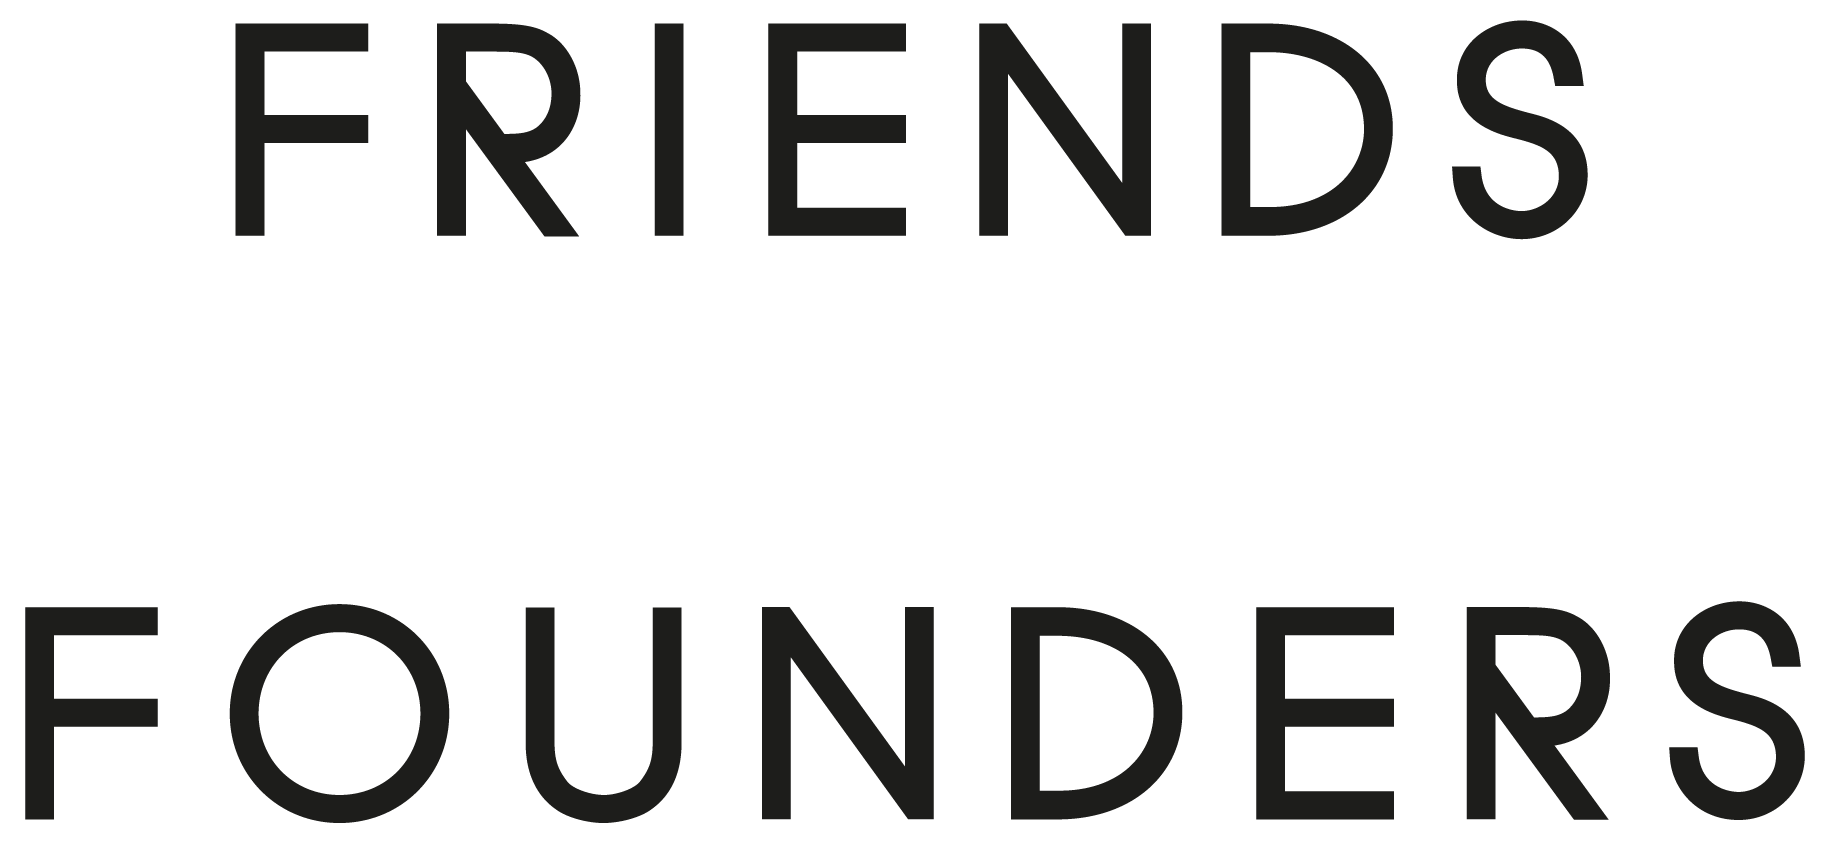 Friends & Founders